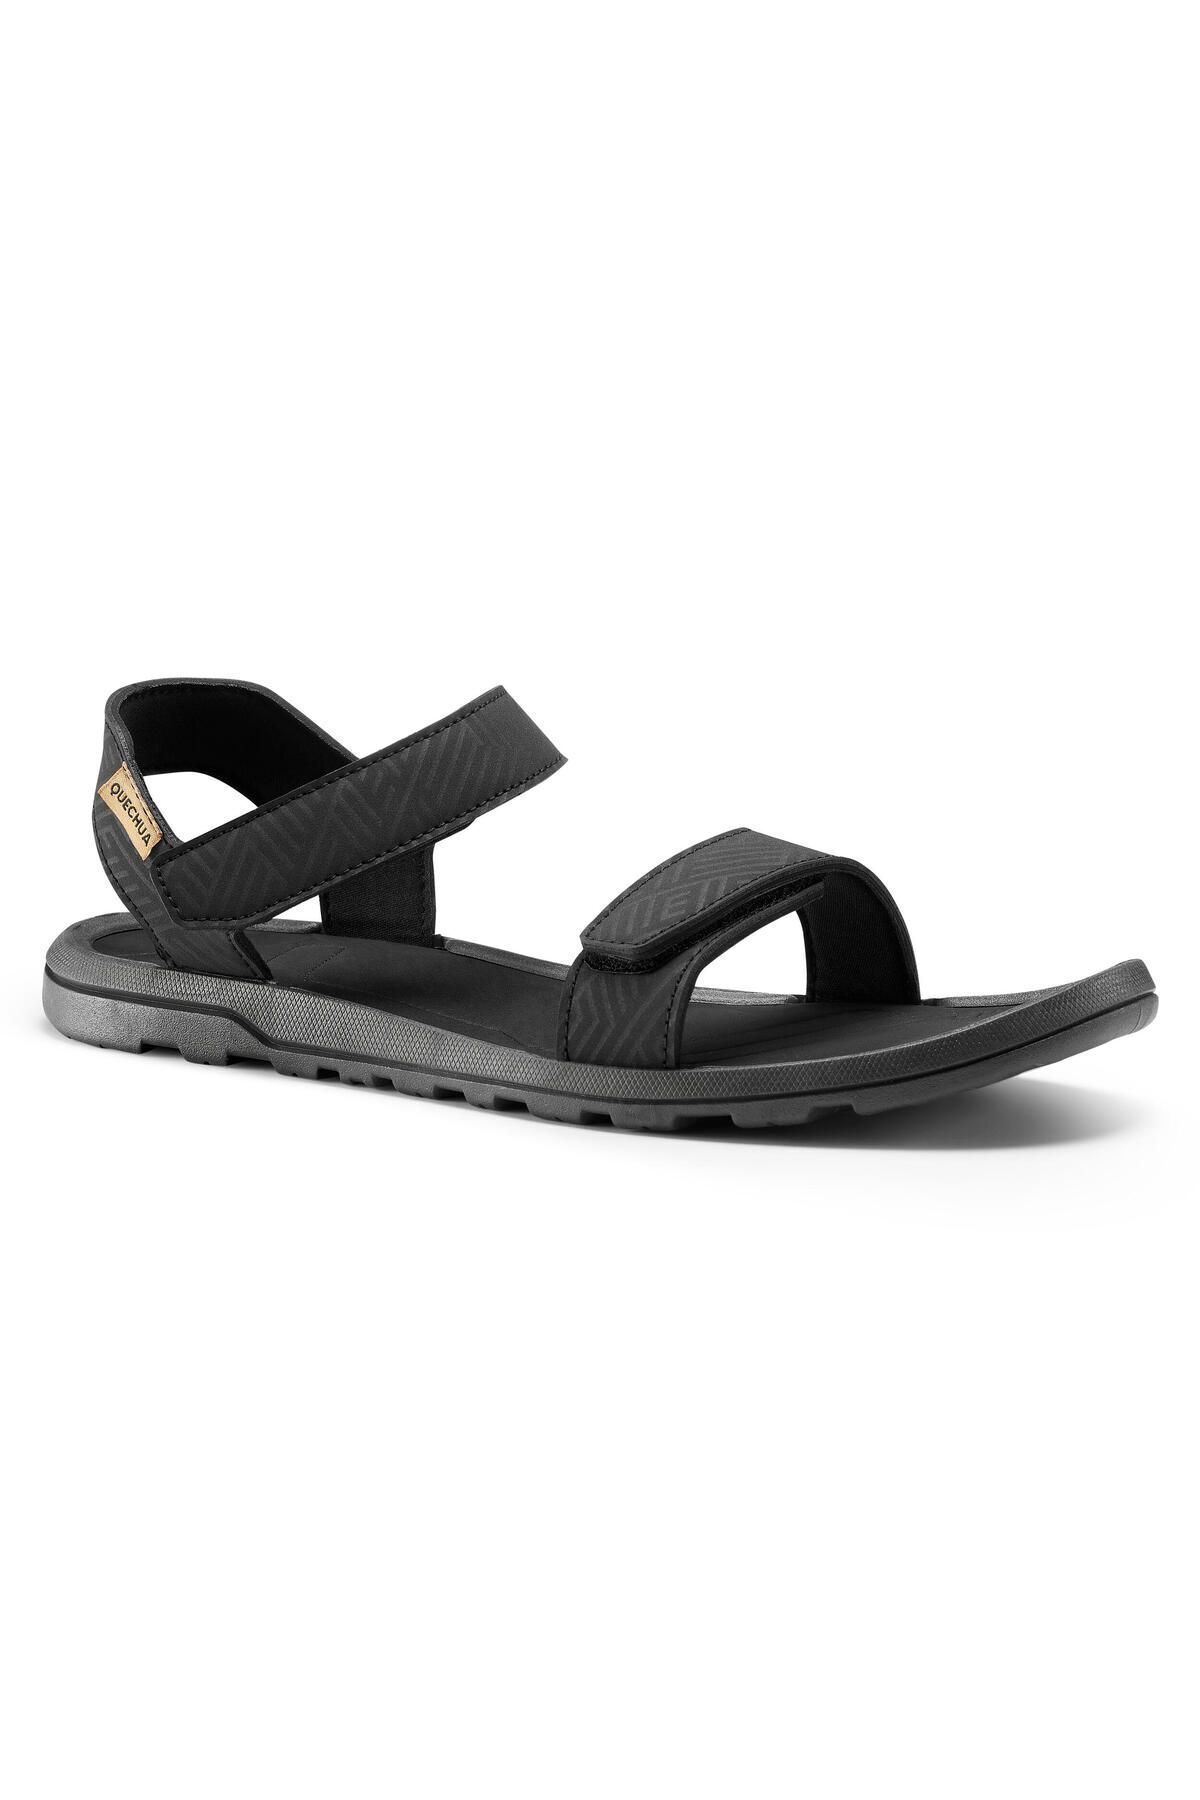 Decathlon Erkek Outdoor Sandalet - Siyah - Nh50